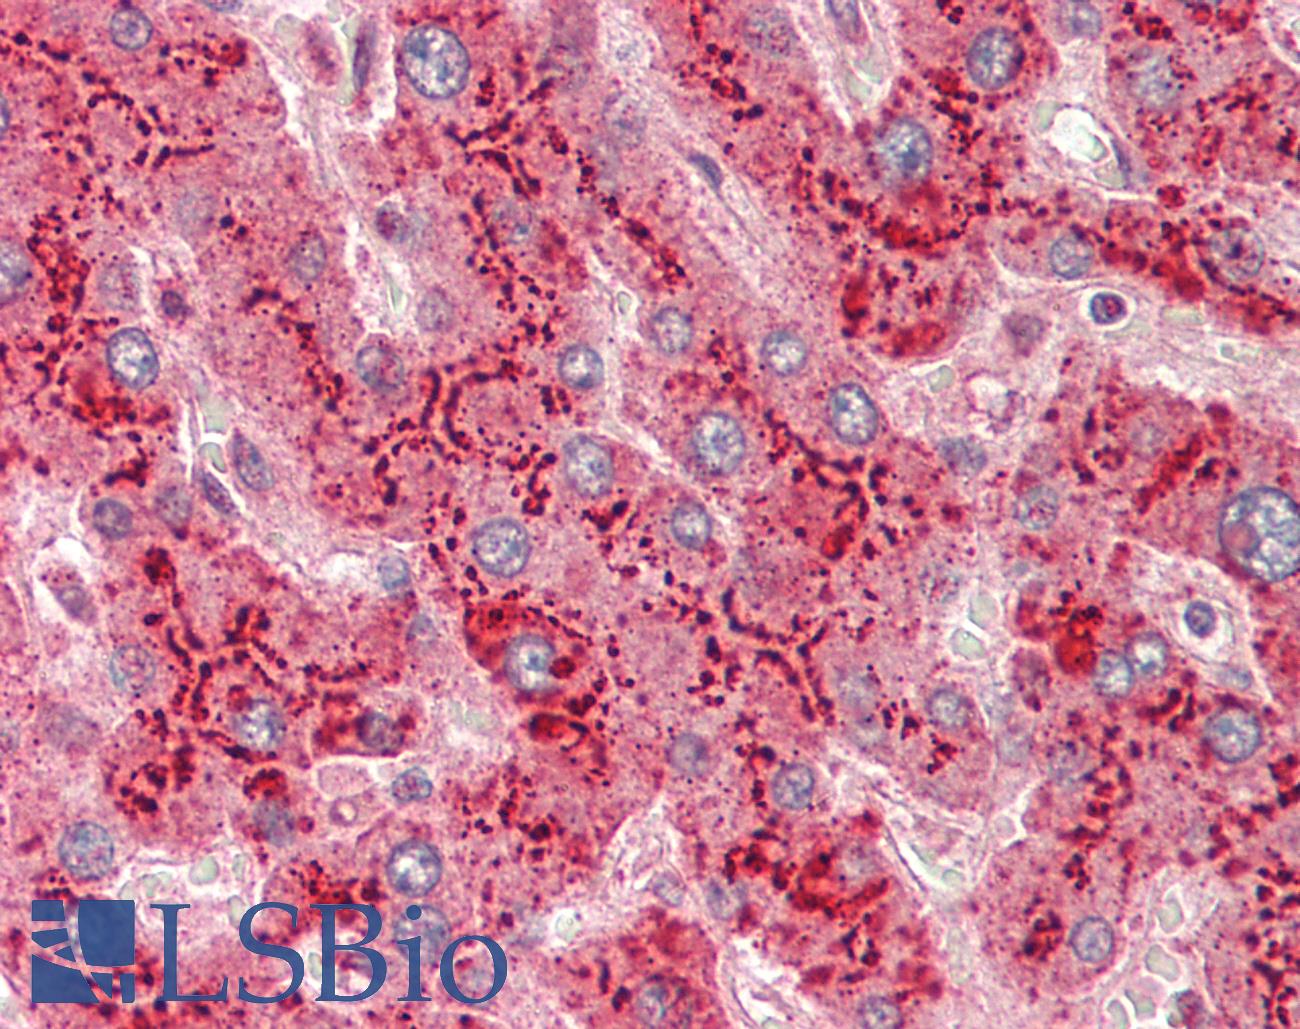 SAA1 / SAA / Serum Amyloid A Antibody - Human Liver: Formalin-Fixed, Paraffin-Embedded (FFPE)